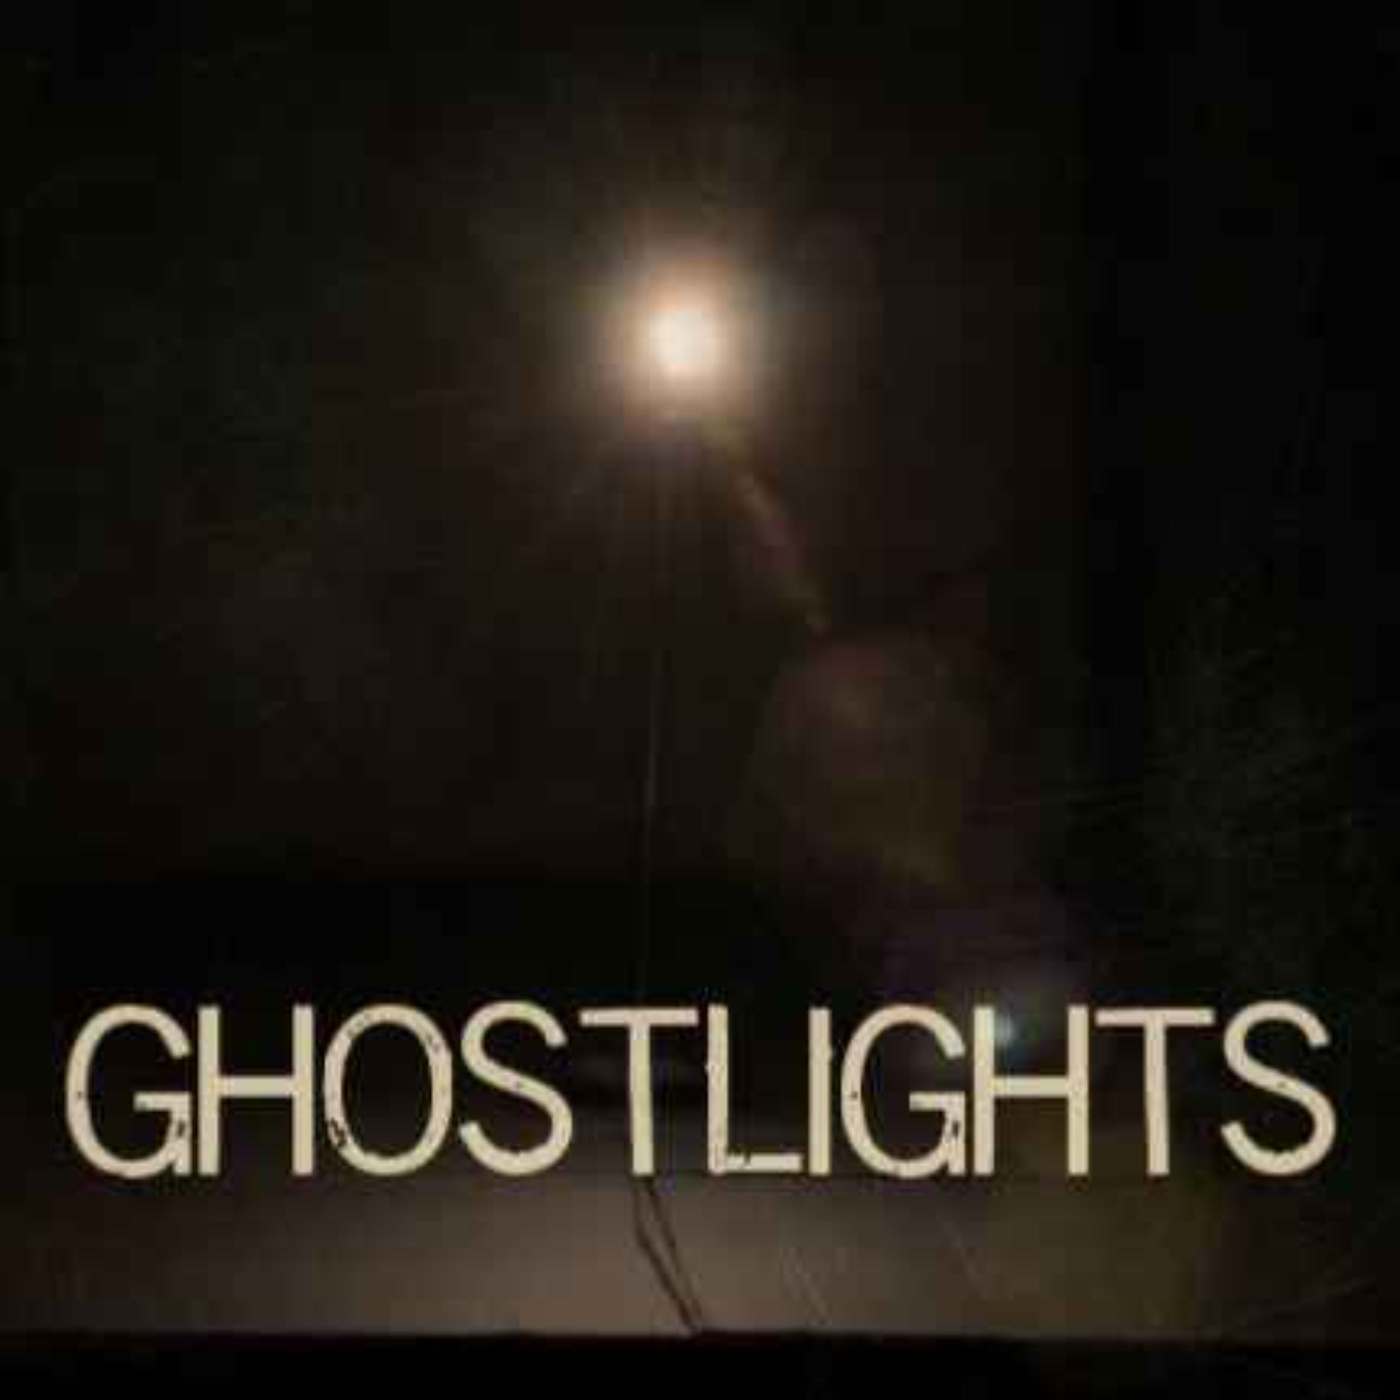 Ghostlights, ep. 1: Box